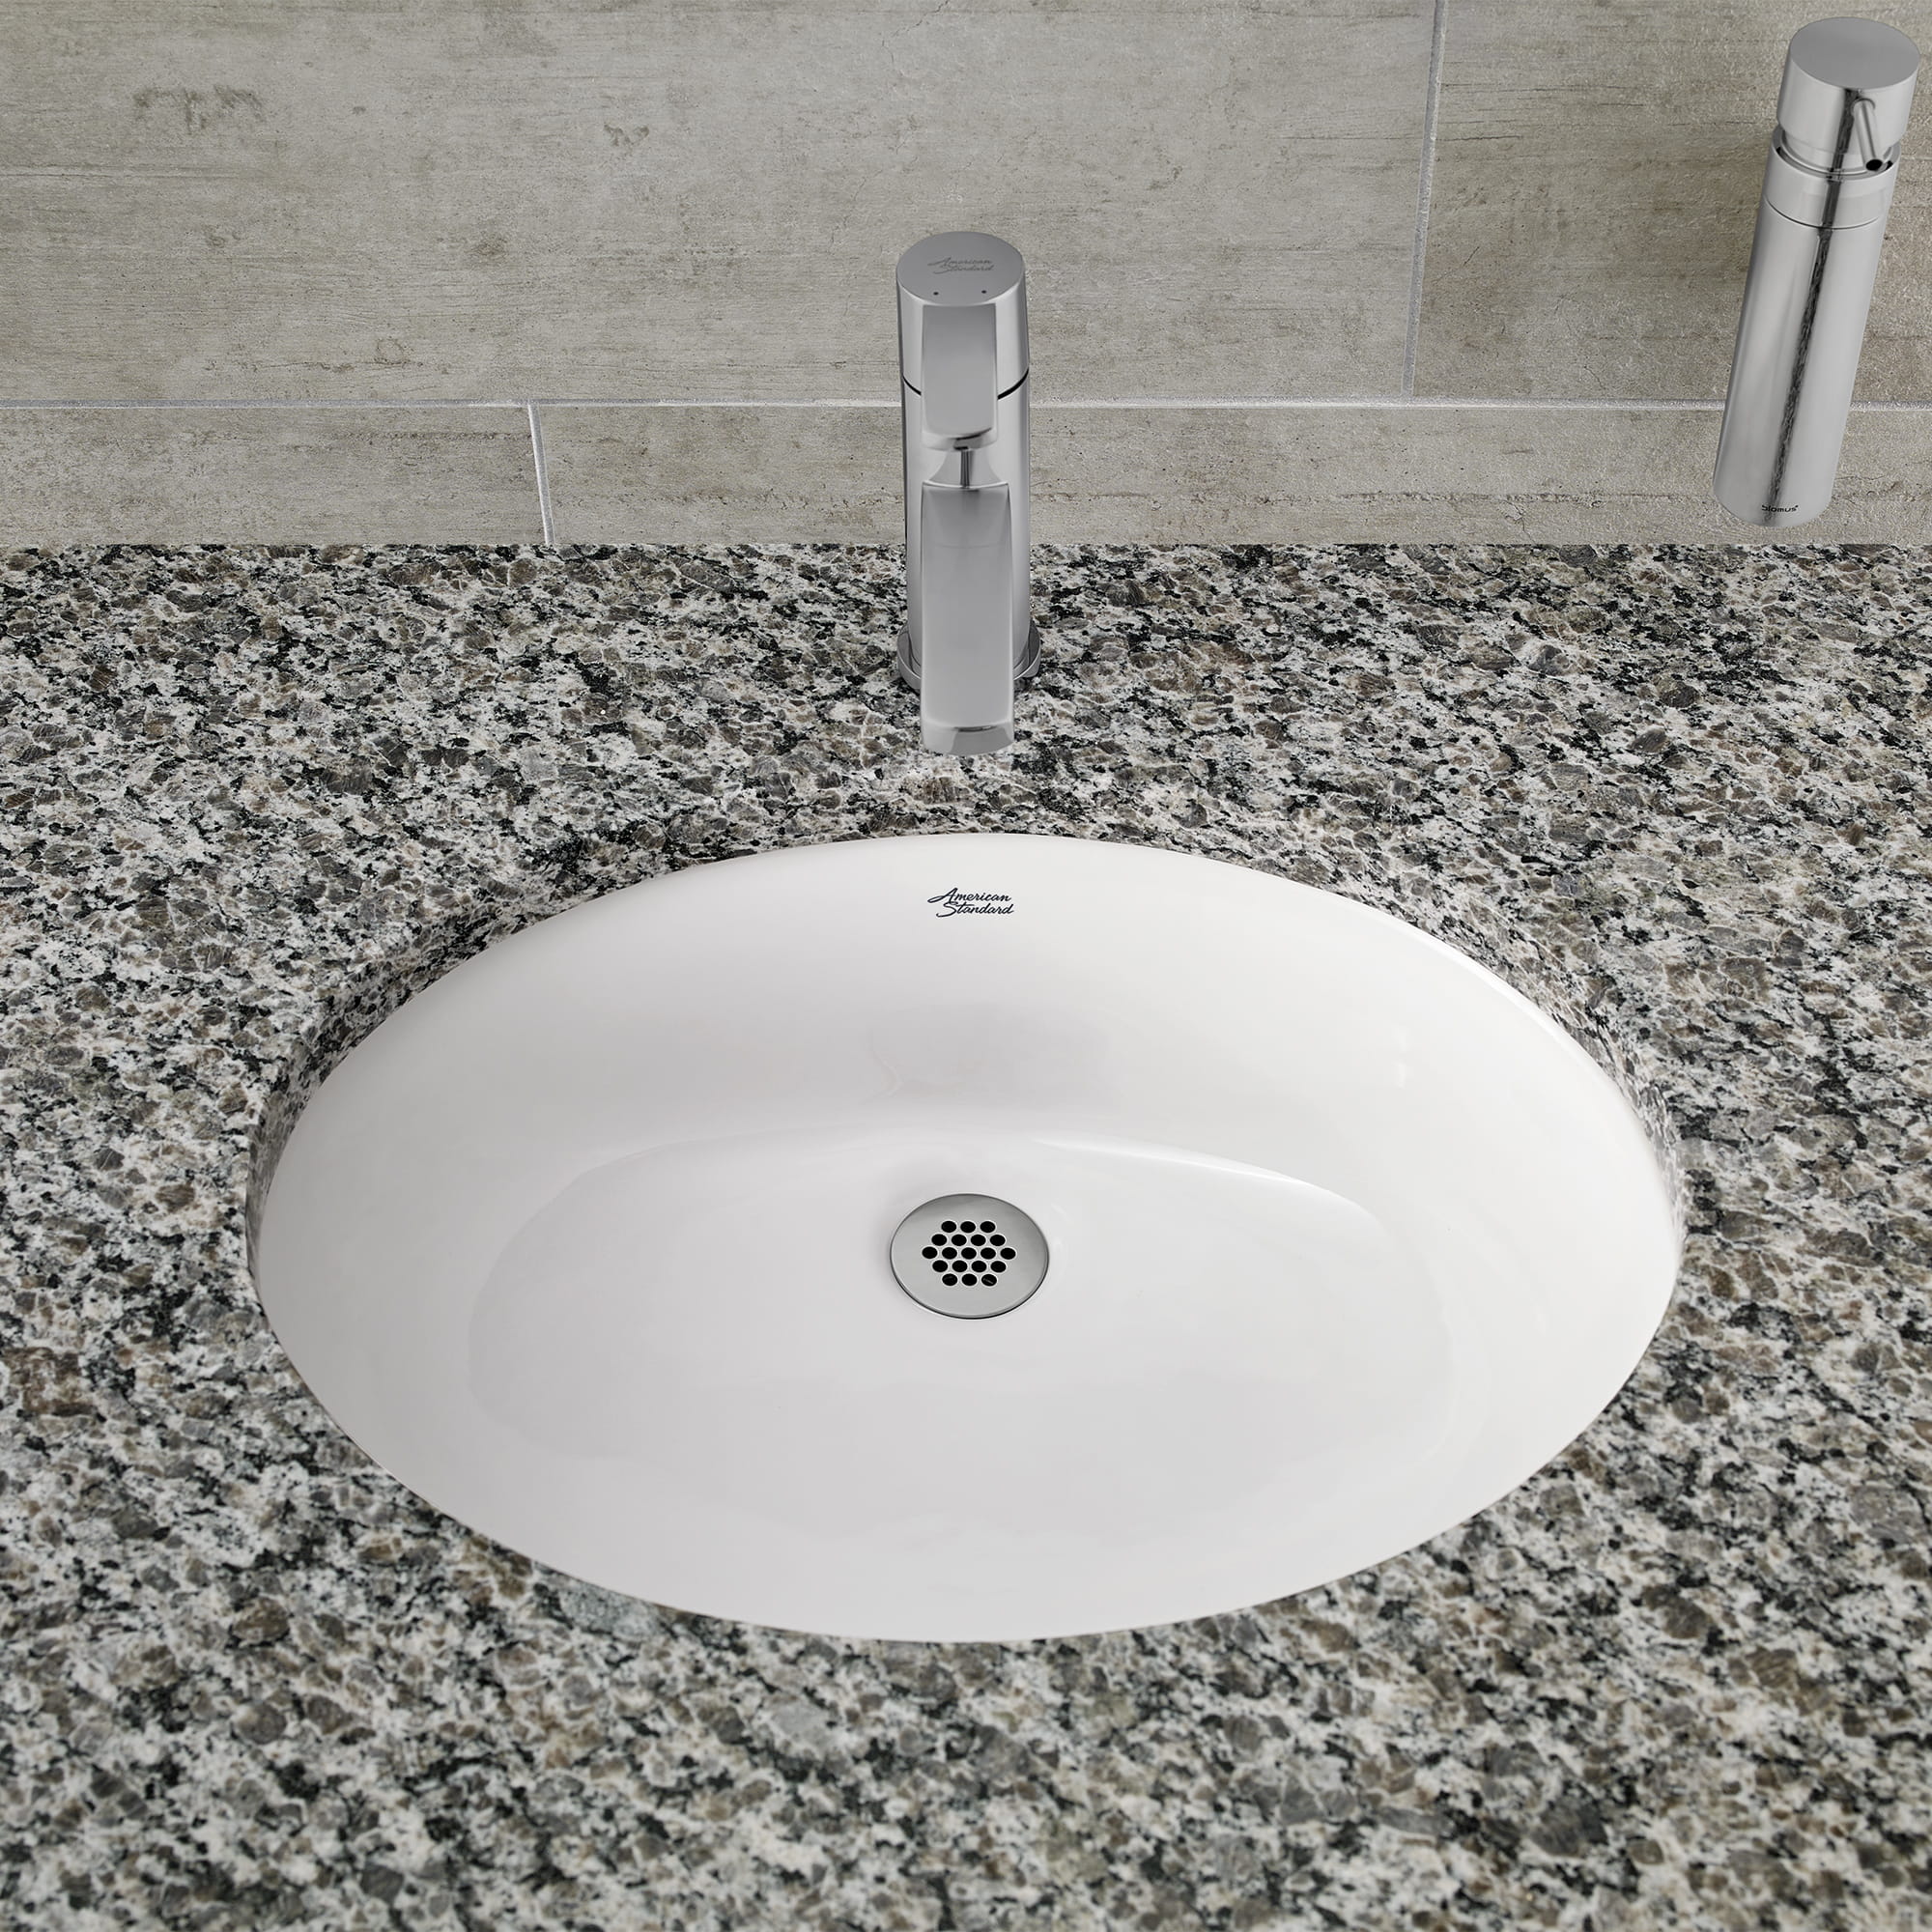 Berwick Single Hole Single Handle Bathroom Faucet
12 gpm 45 L min With Lever Handle CHROME